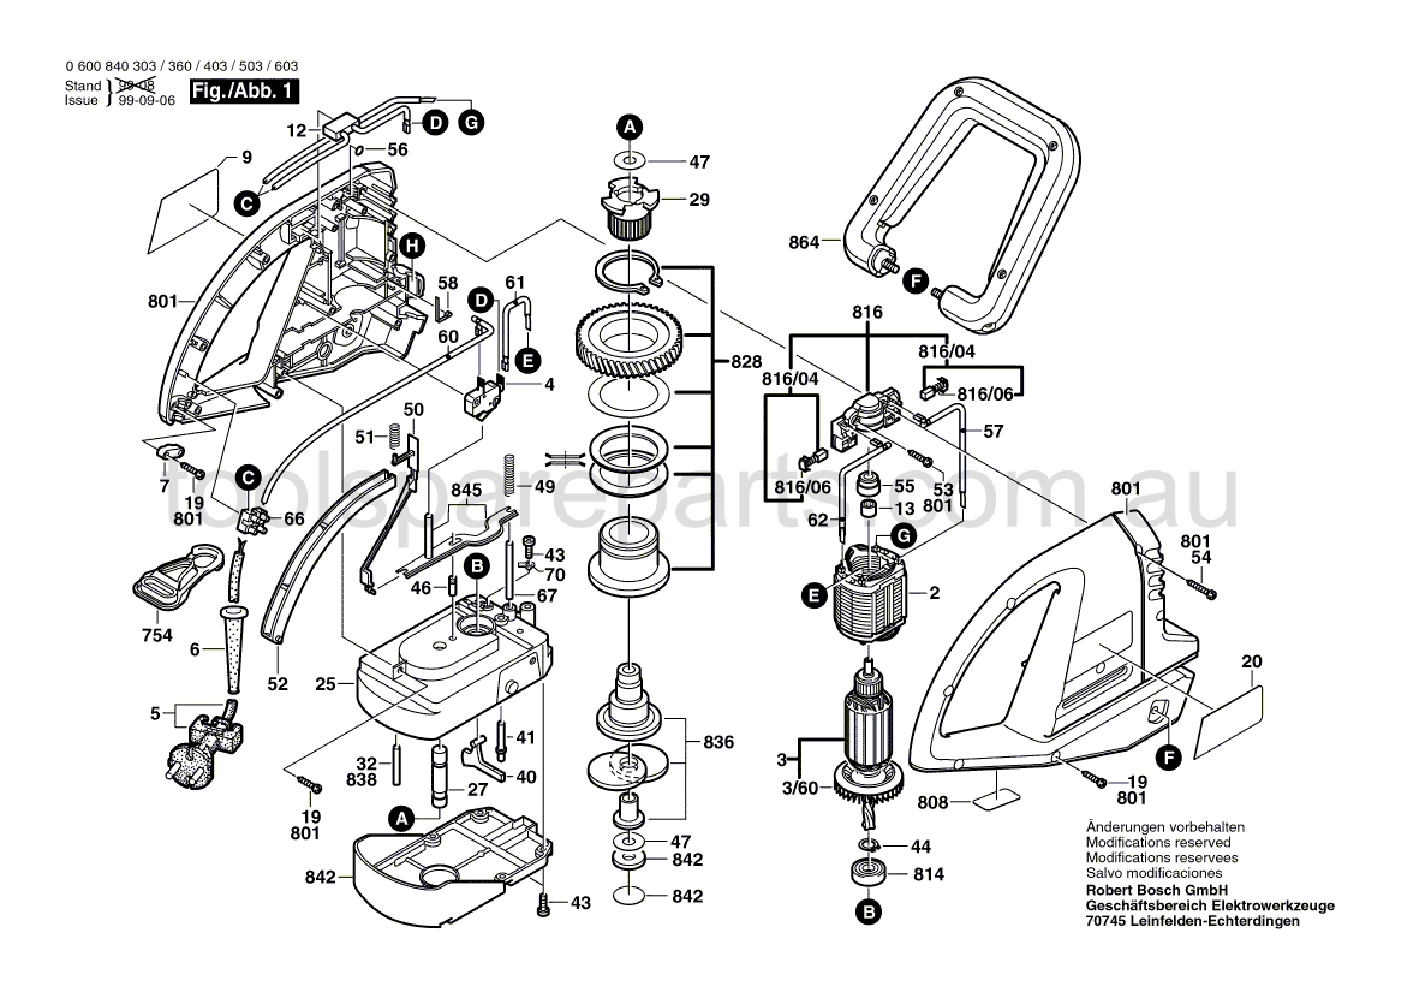 Bosch AHS 700-34 0600840637  Diagram 1